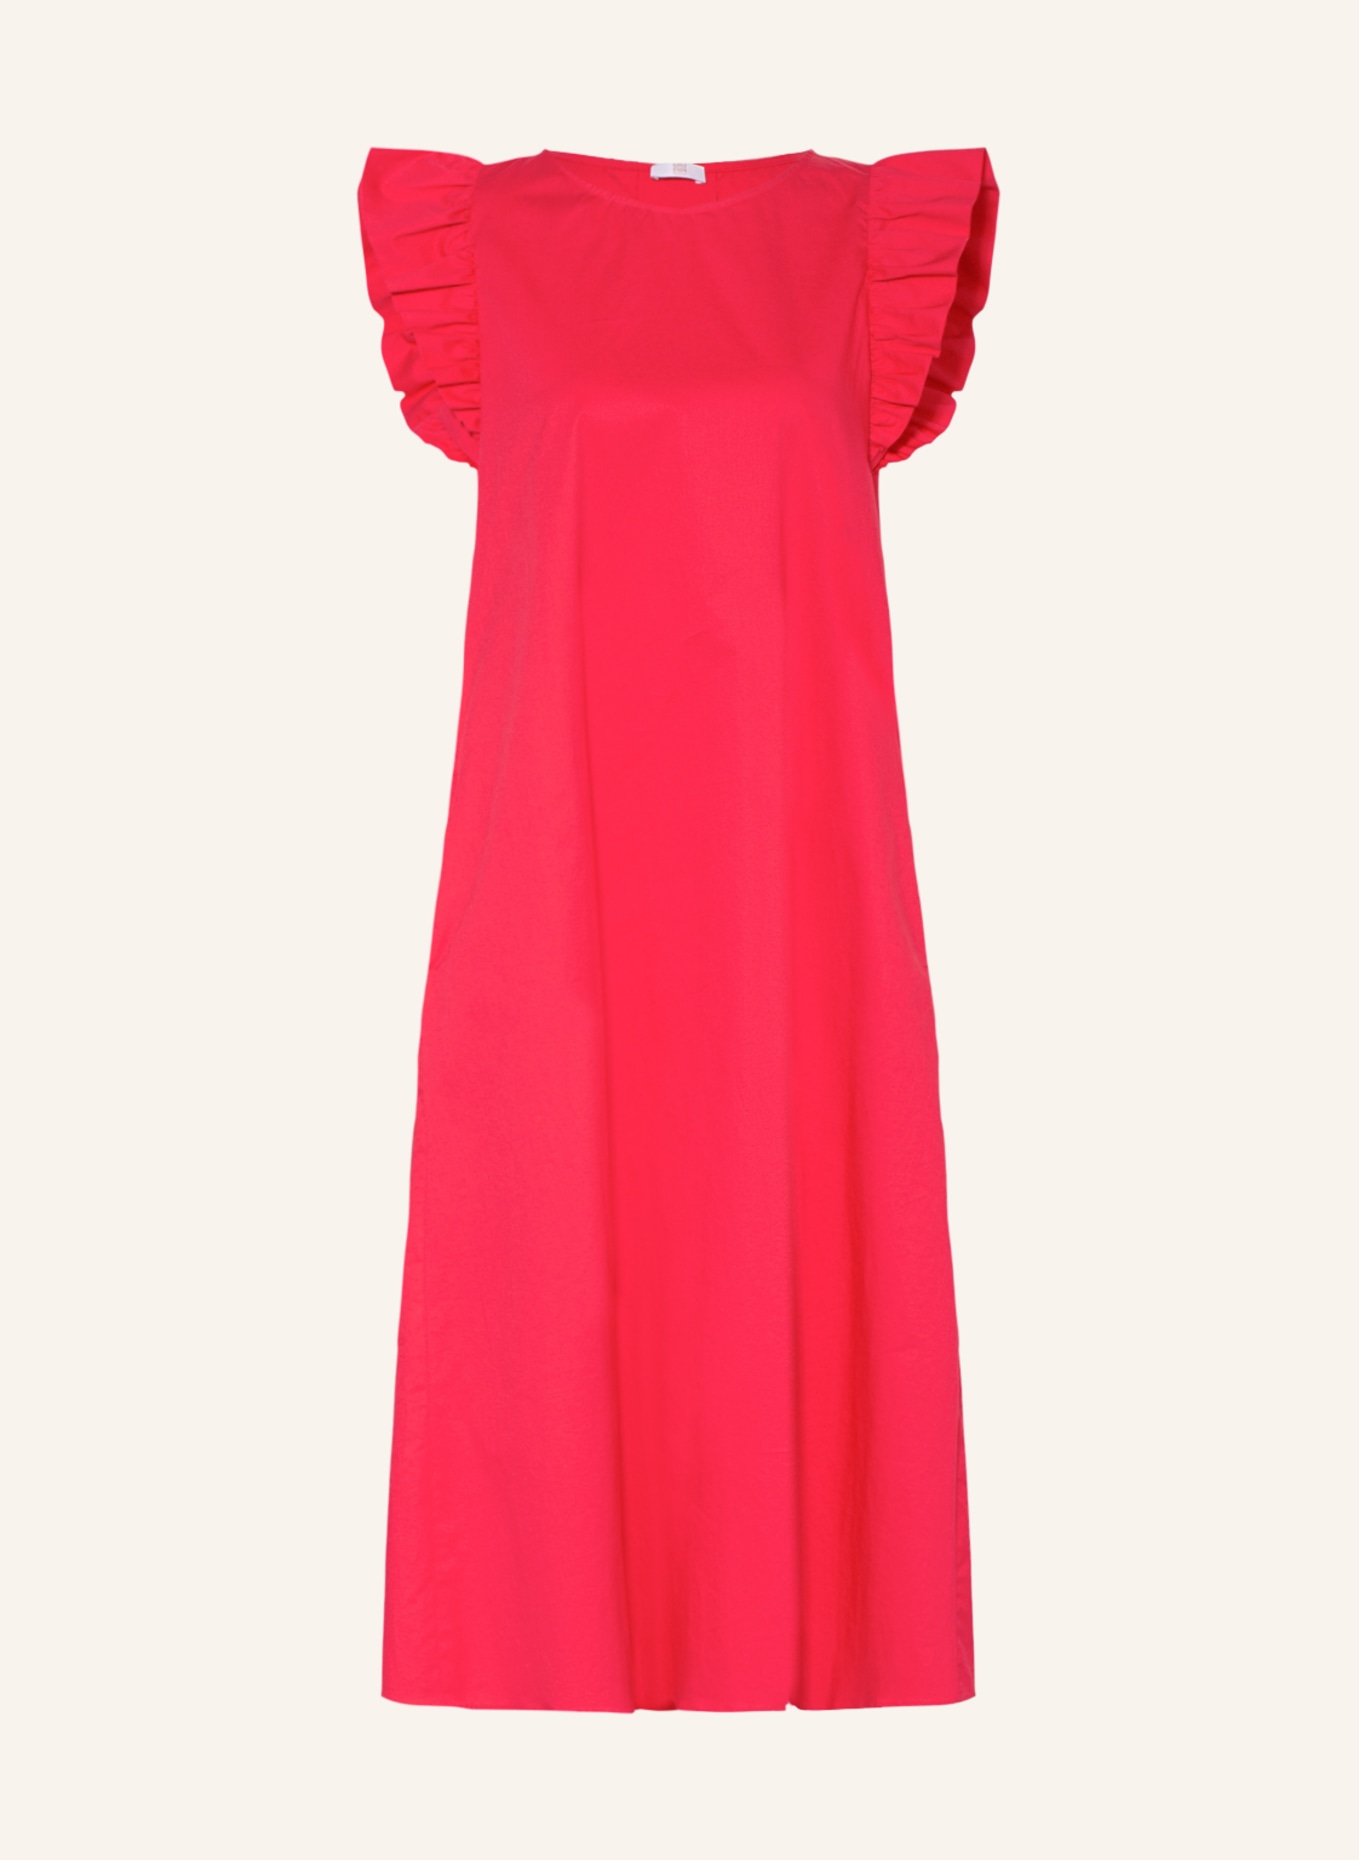 RIANI Kleid, Farbe: FUCHSIA (Bild 1)